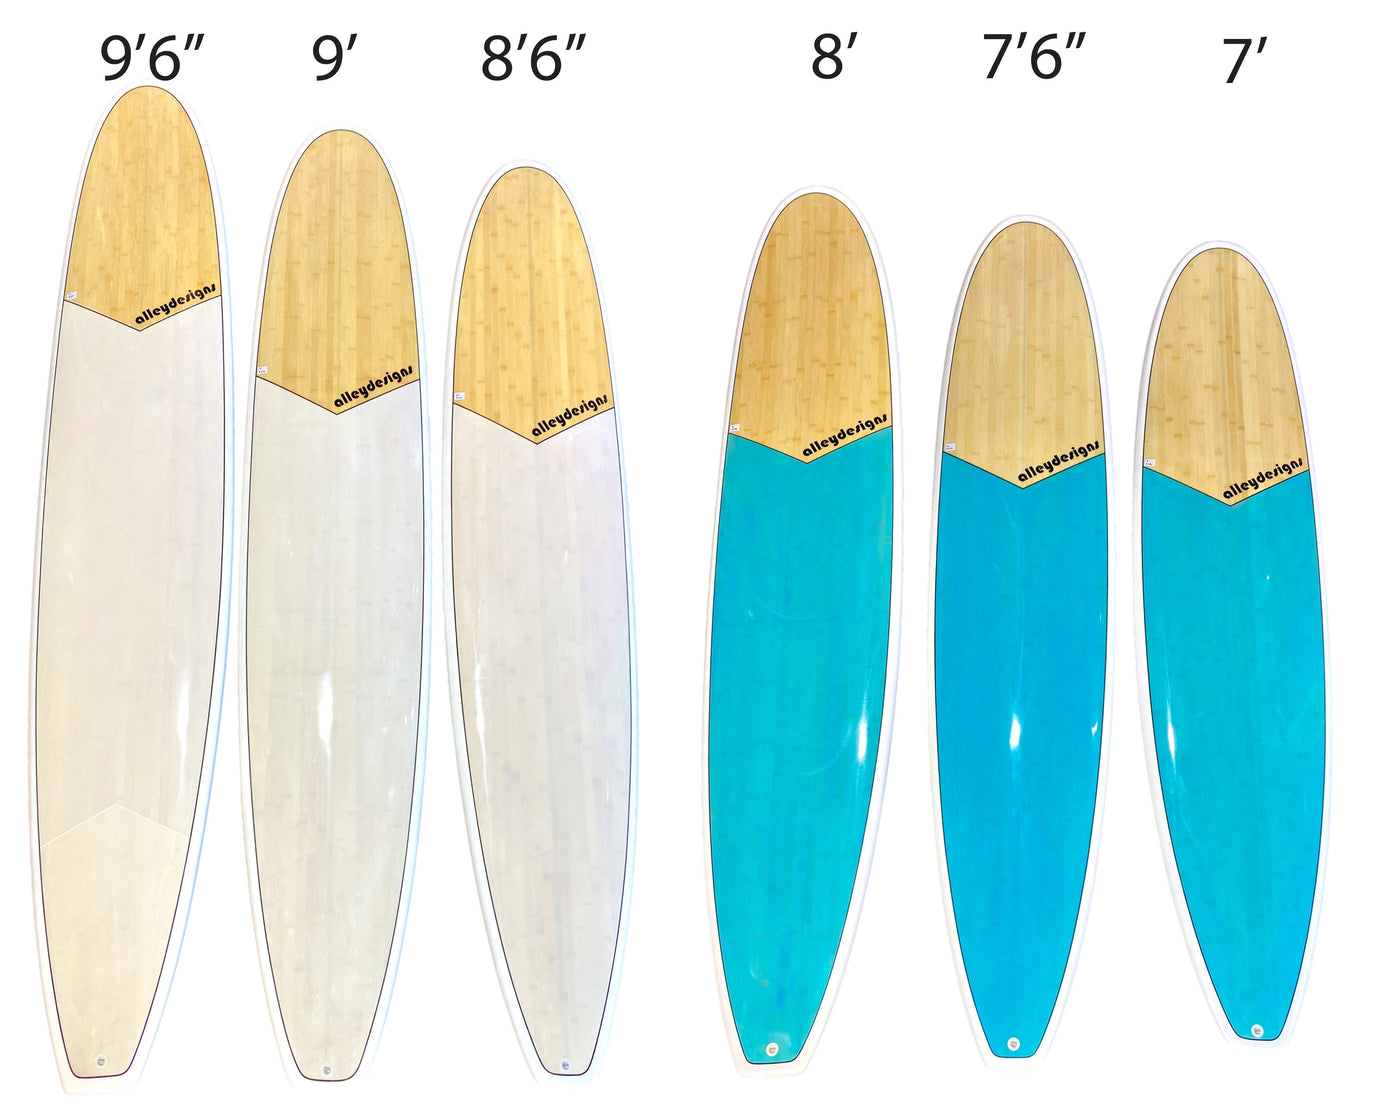 Surfboard 8' "The Sunshine Underground" Bamboo Aqua FREE BAG + FINS + LEASH & WAX WORTH $150 - Alleydesigns  Pty Ltd                                             ABN: 44165571264